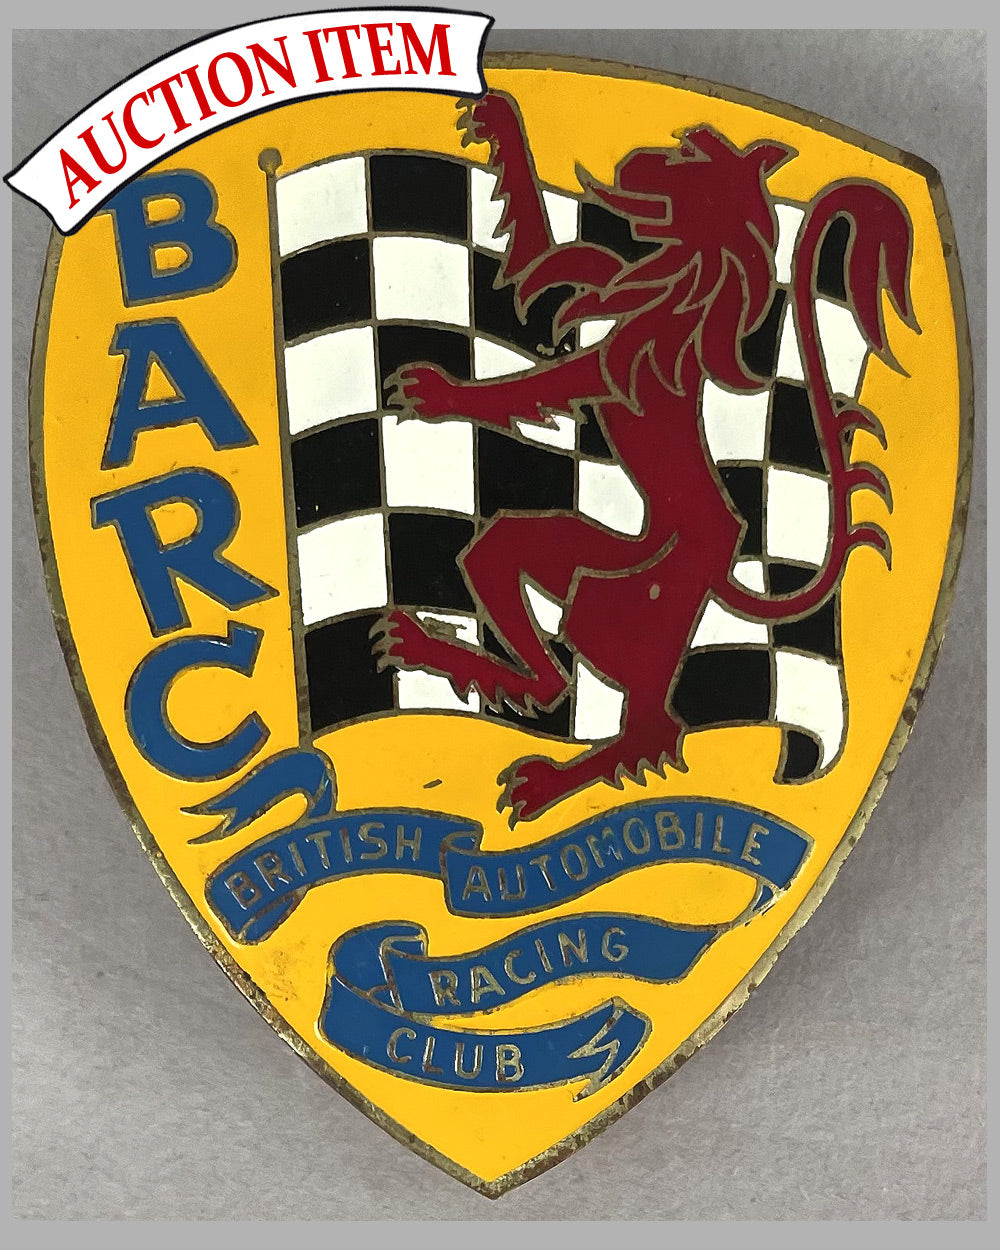 10 - British Automobile Racing Club (BARC) souvenir radiator badge, 1960’s